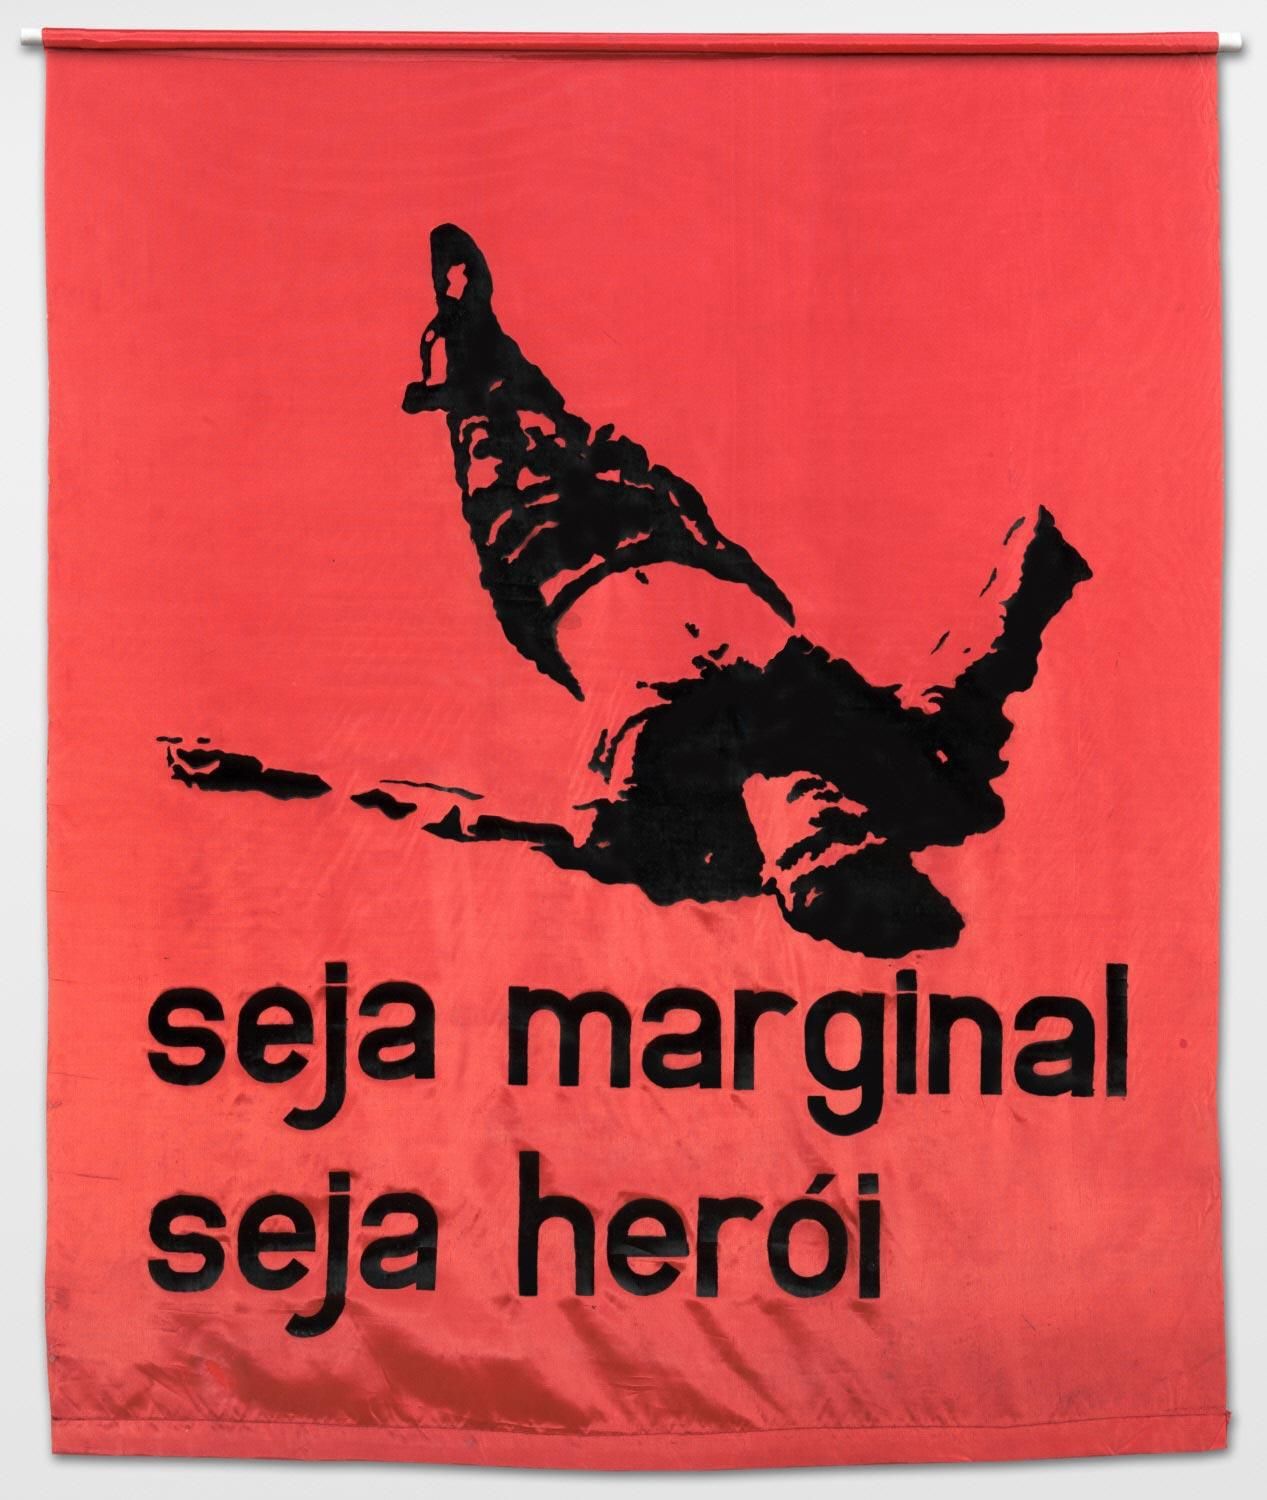 Seja marginal, seja herói (Be an Outlaw, Be a Hero)